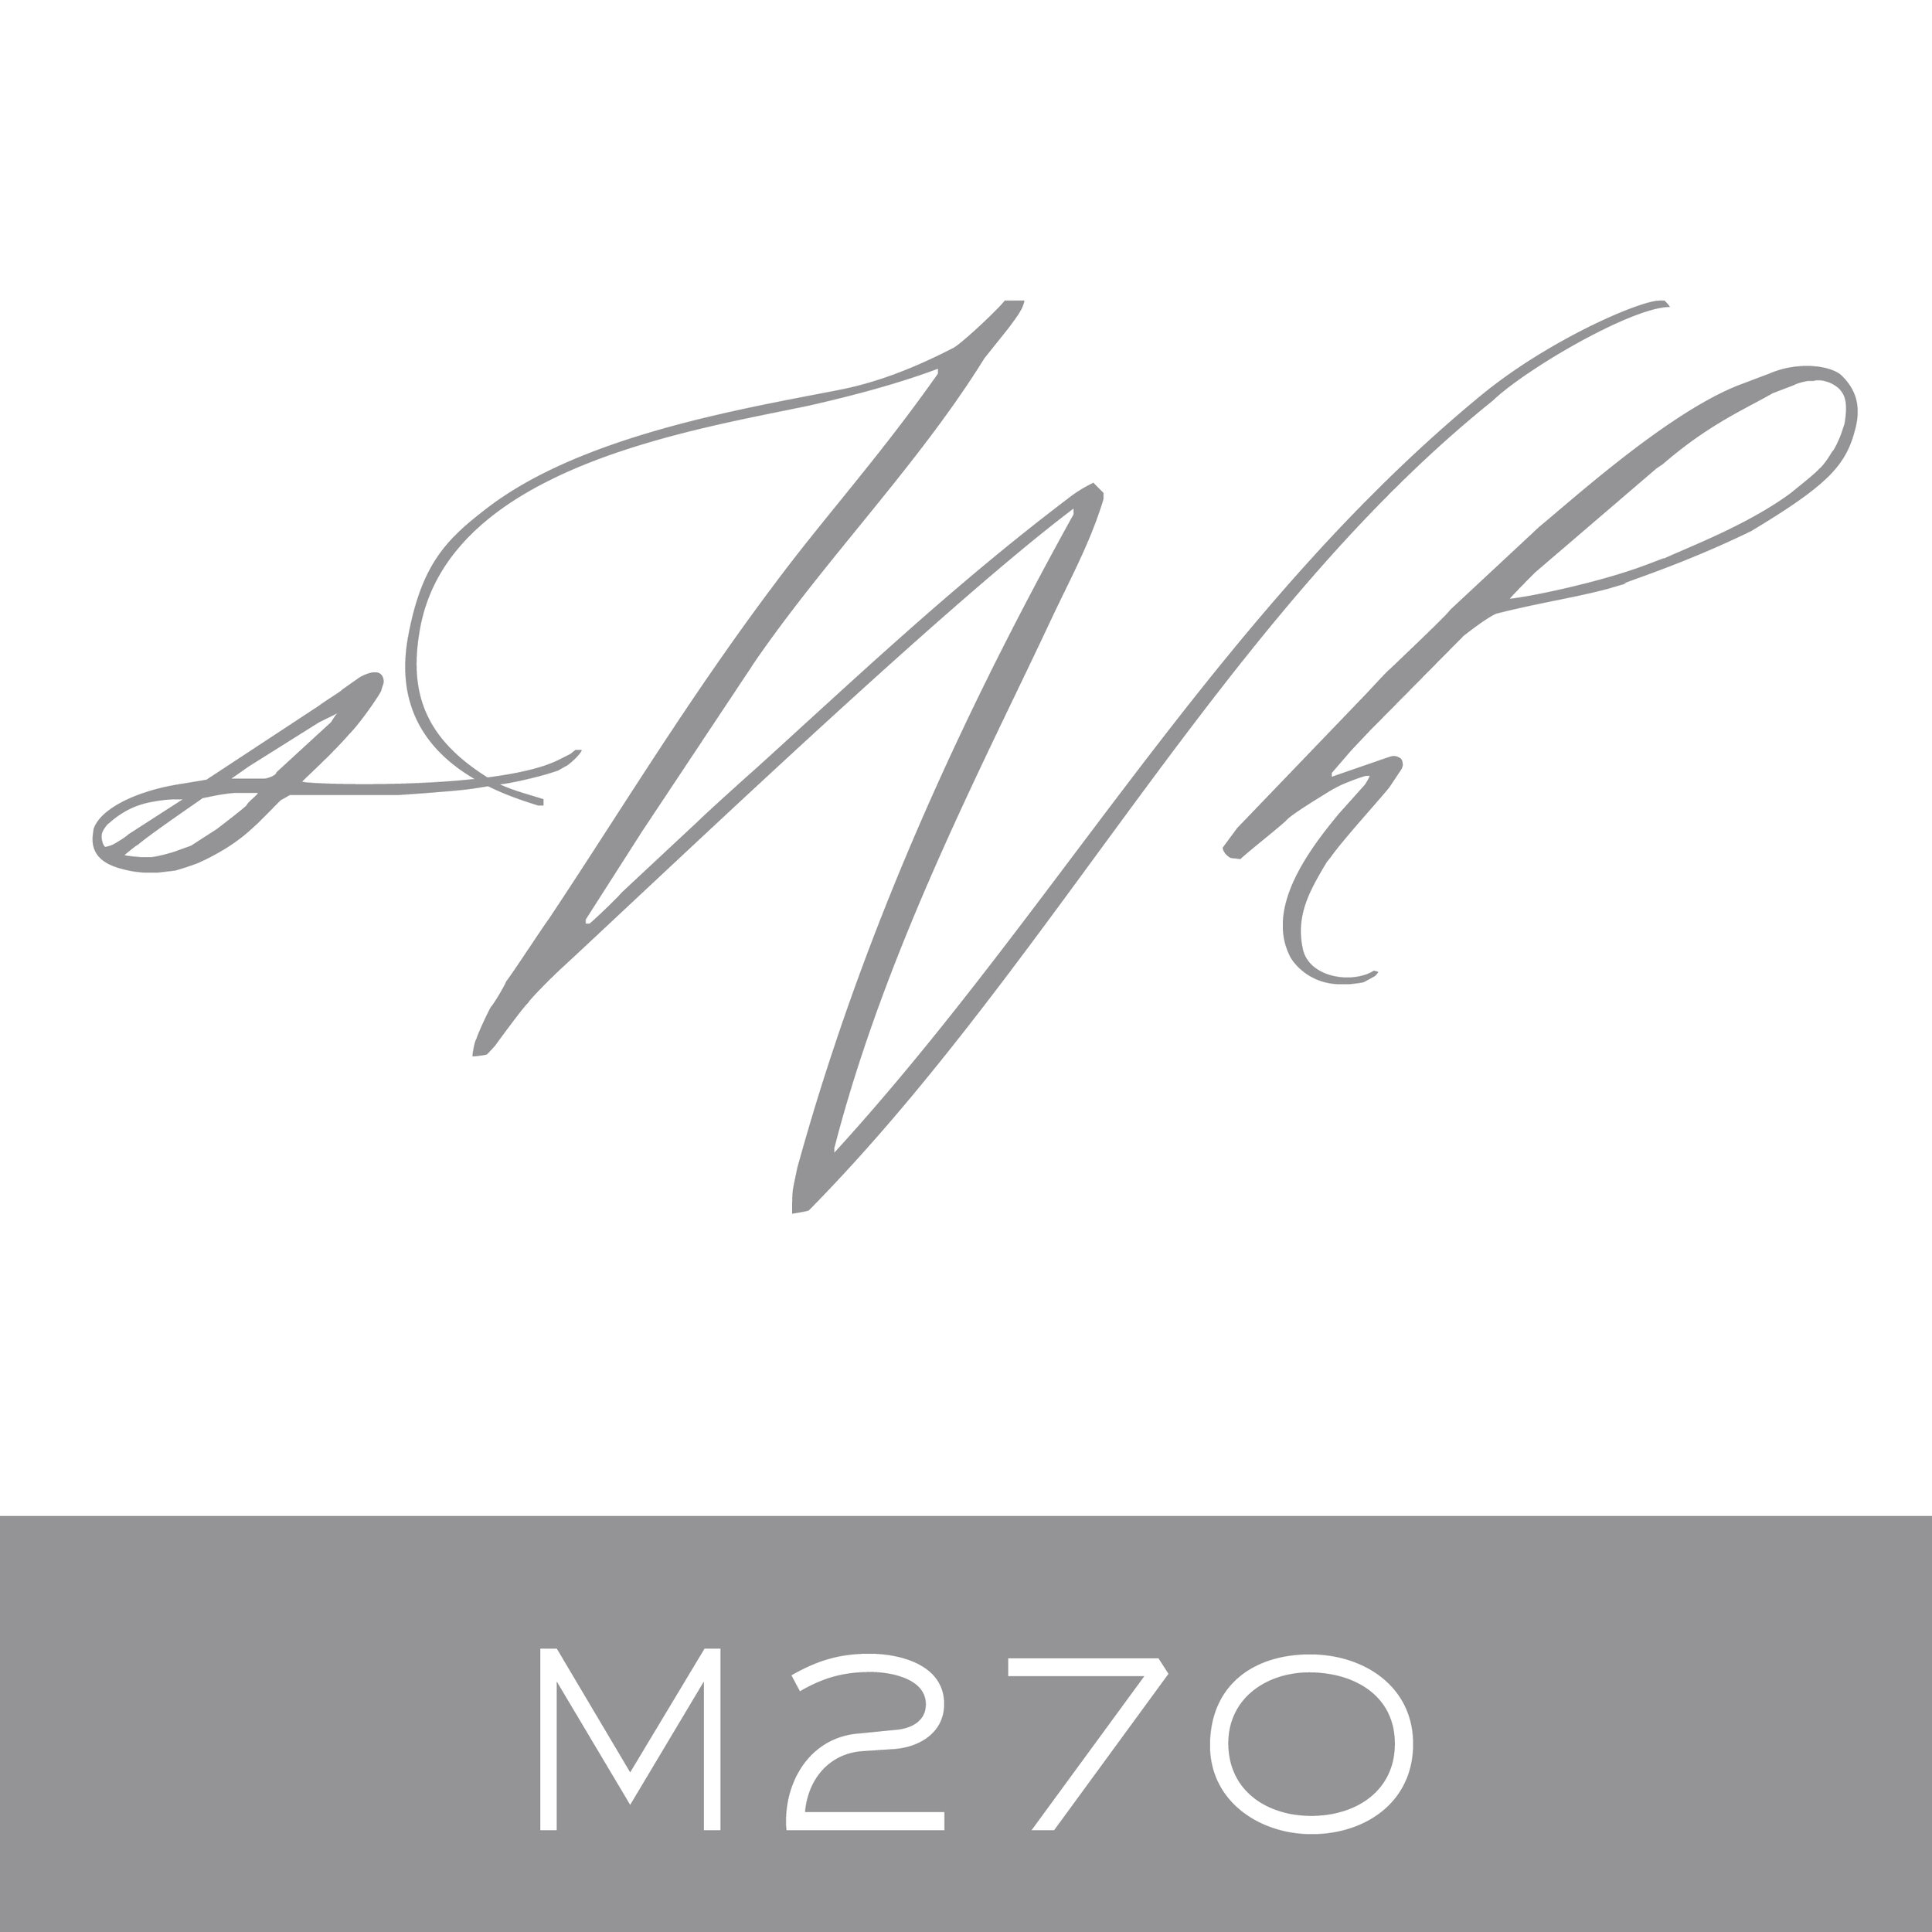 M270.jpg